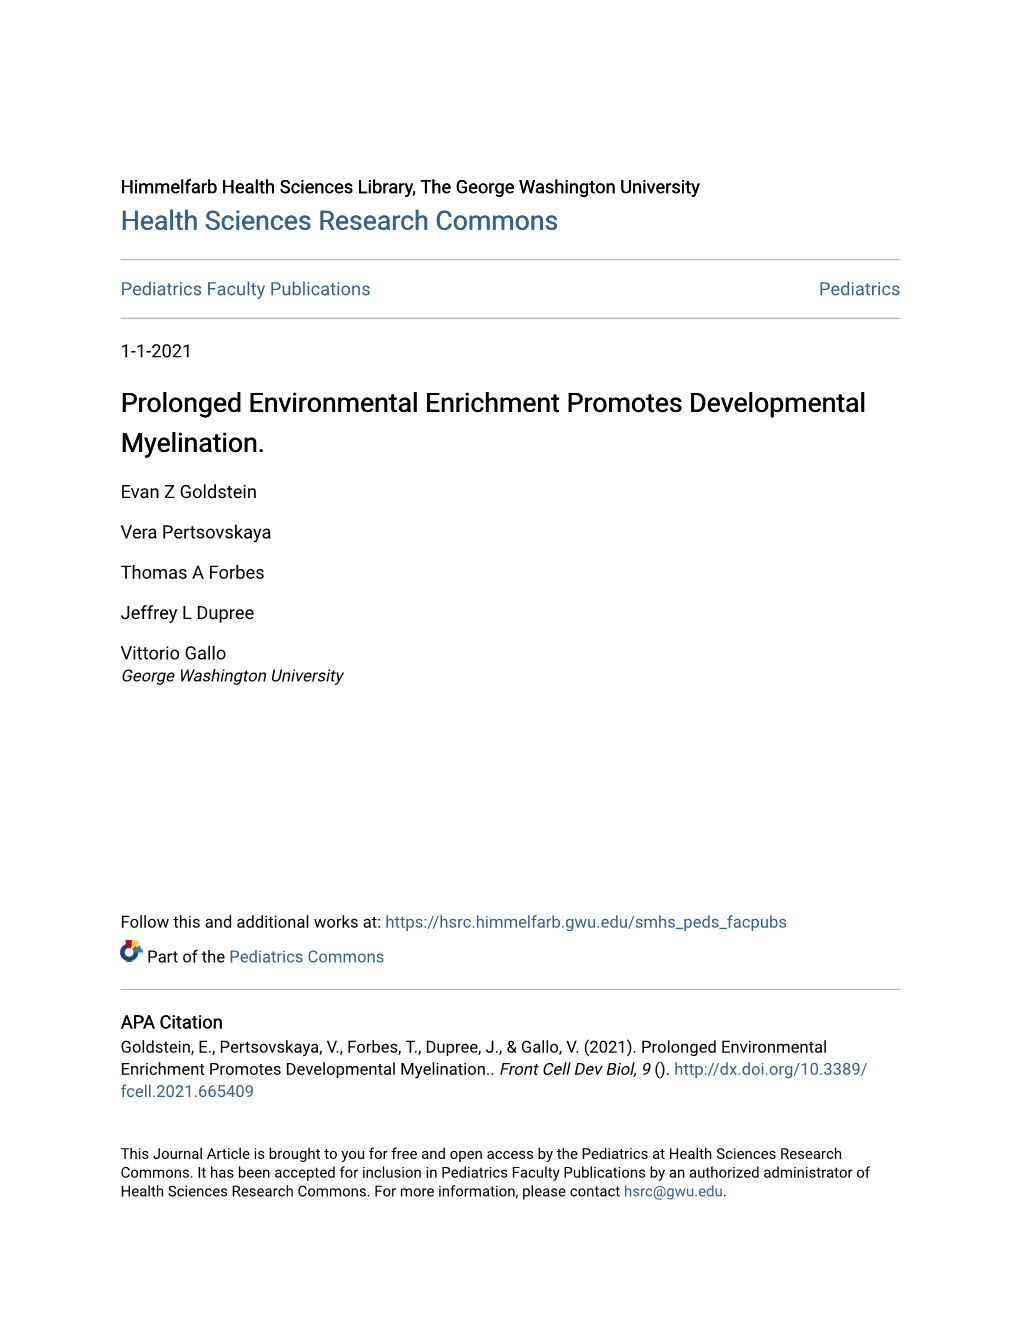 Prolonged Environmental Enrichment Promotes Developmental Myelination